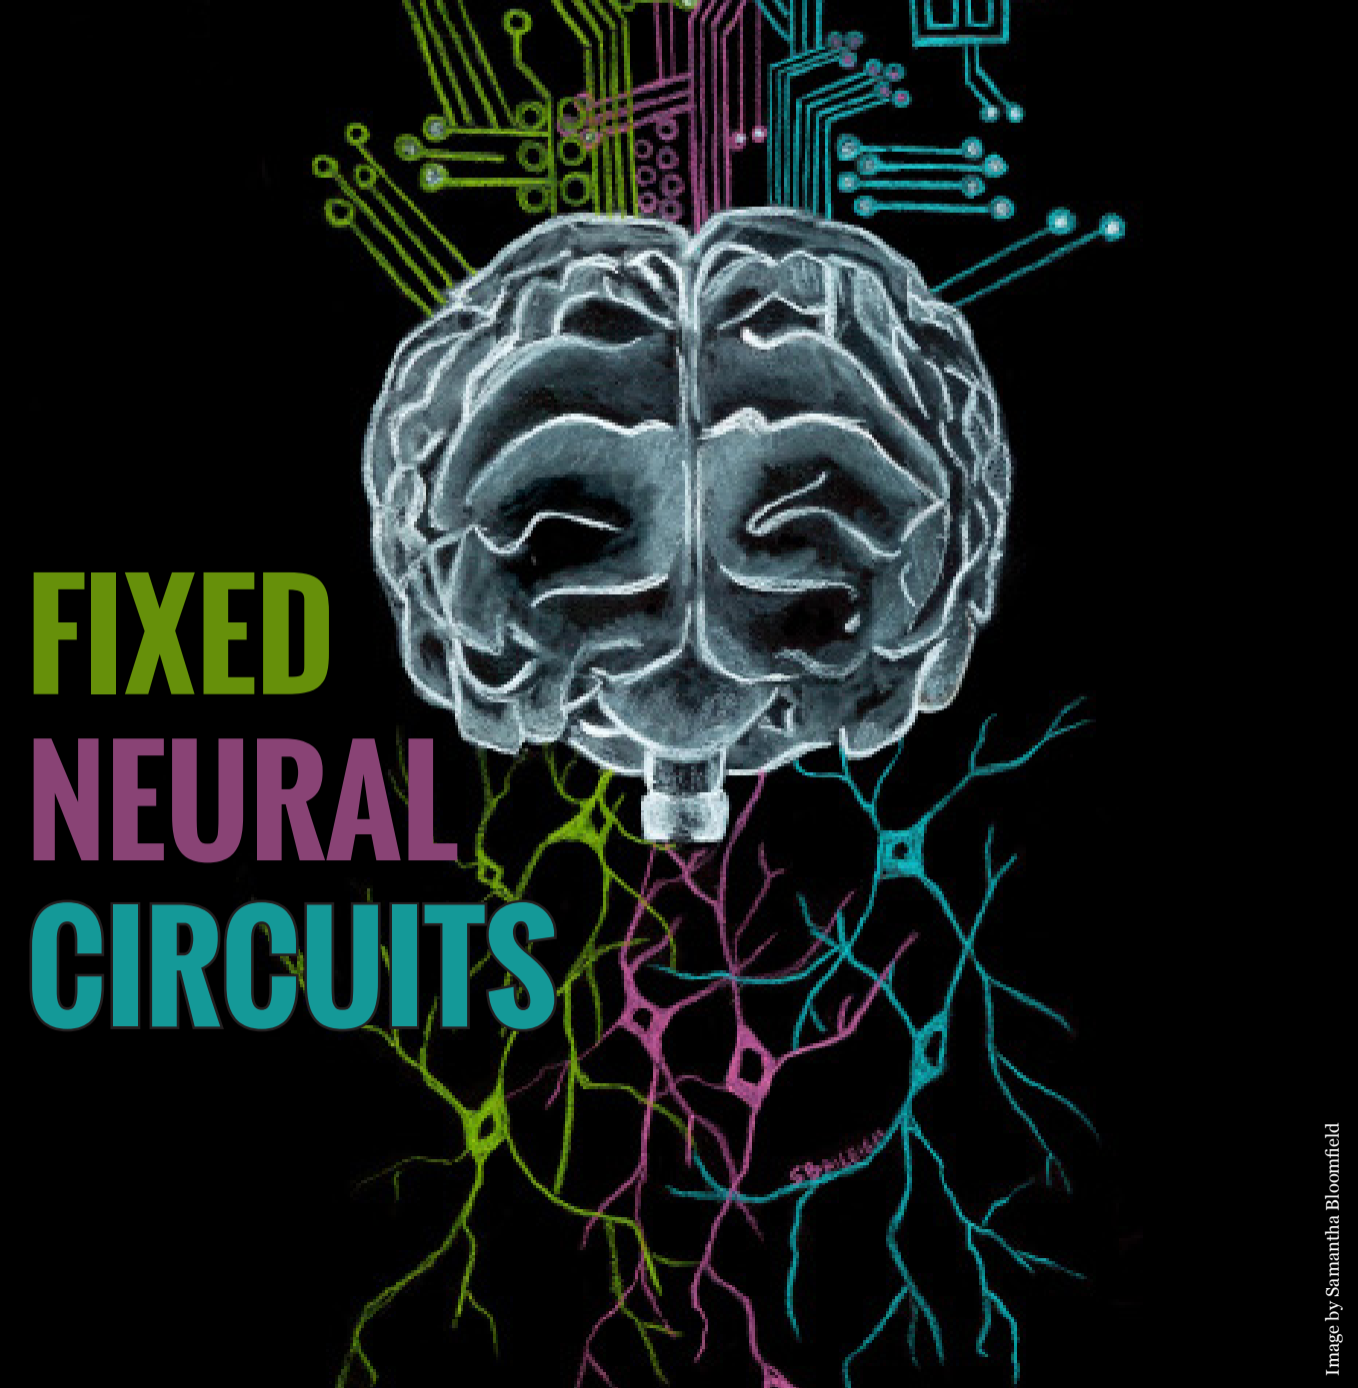 Fixed Neural Circuits